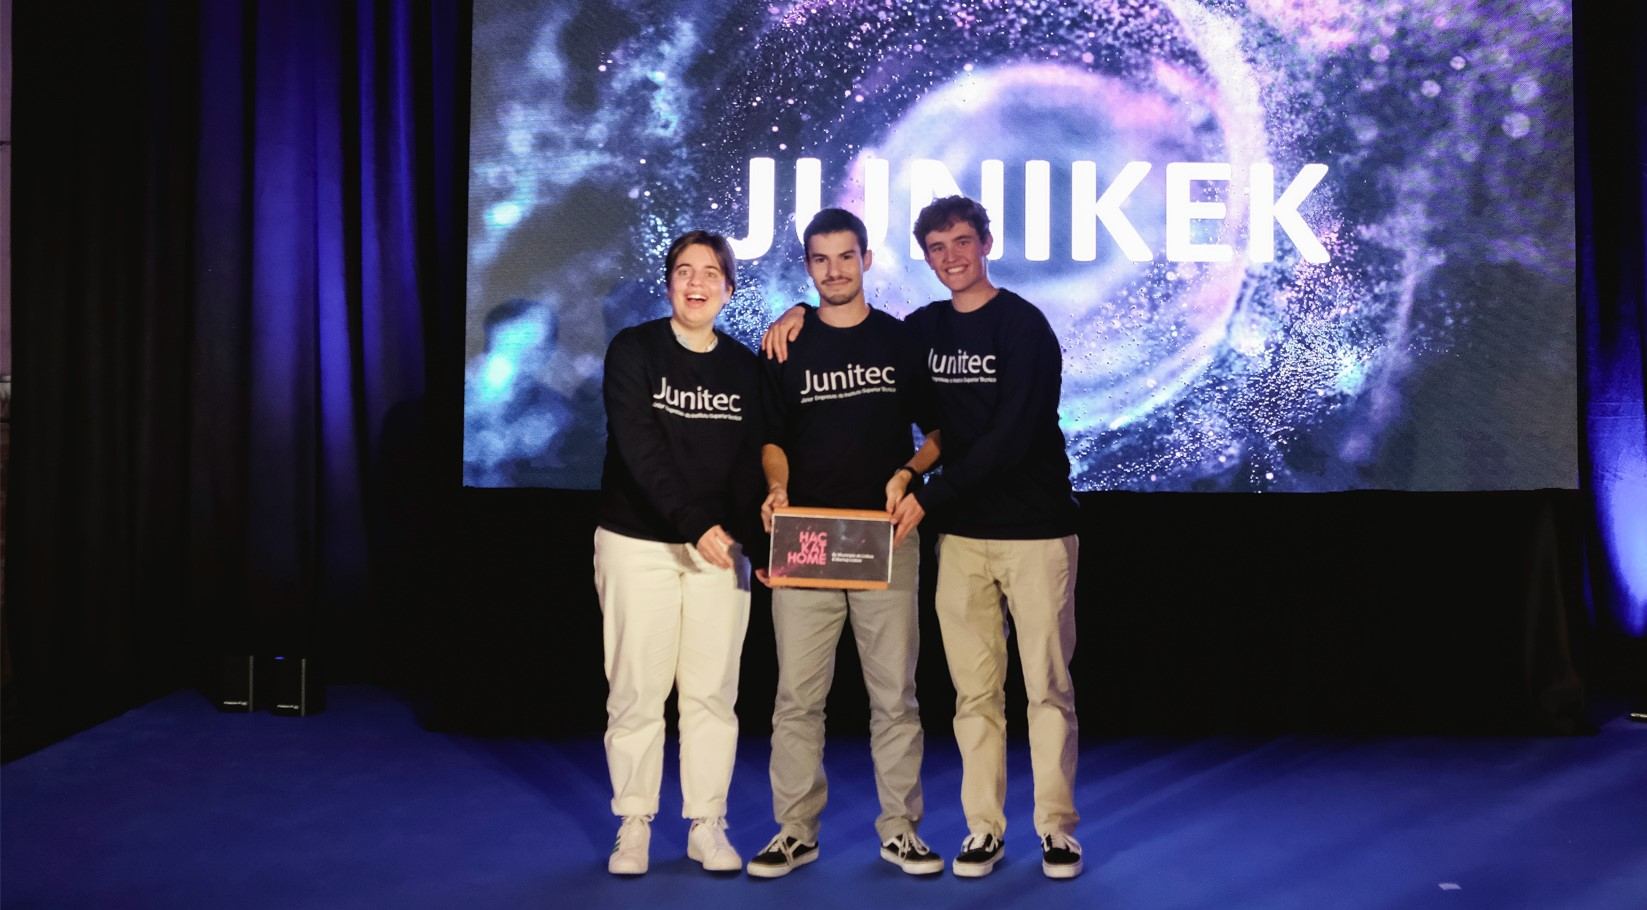 equipa Junikek, vencedores do Hackathome